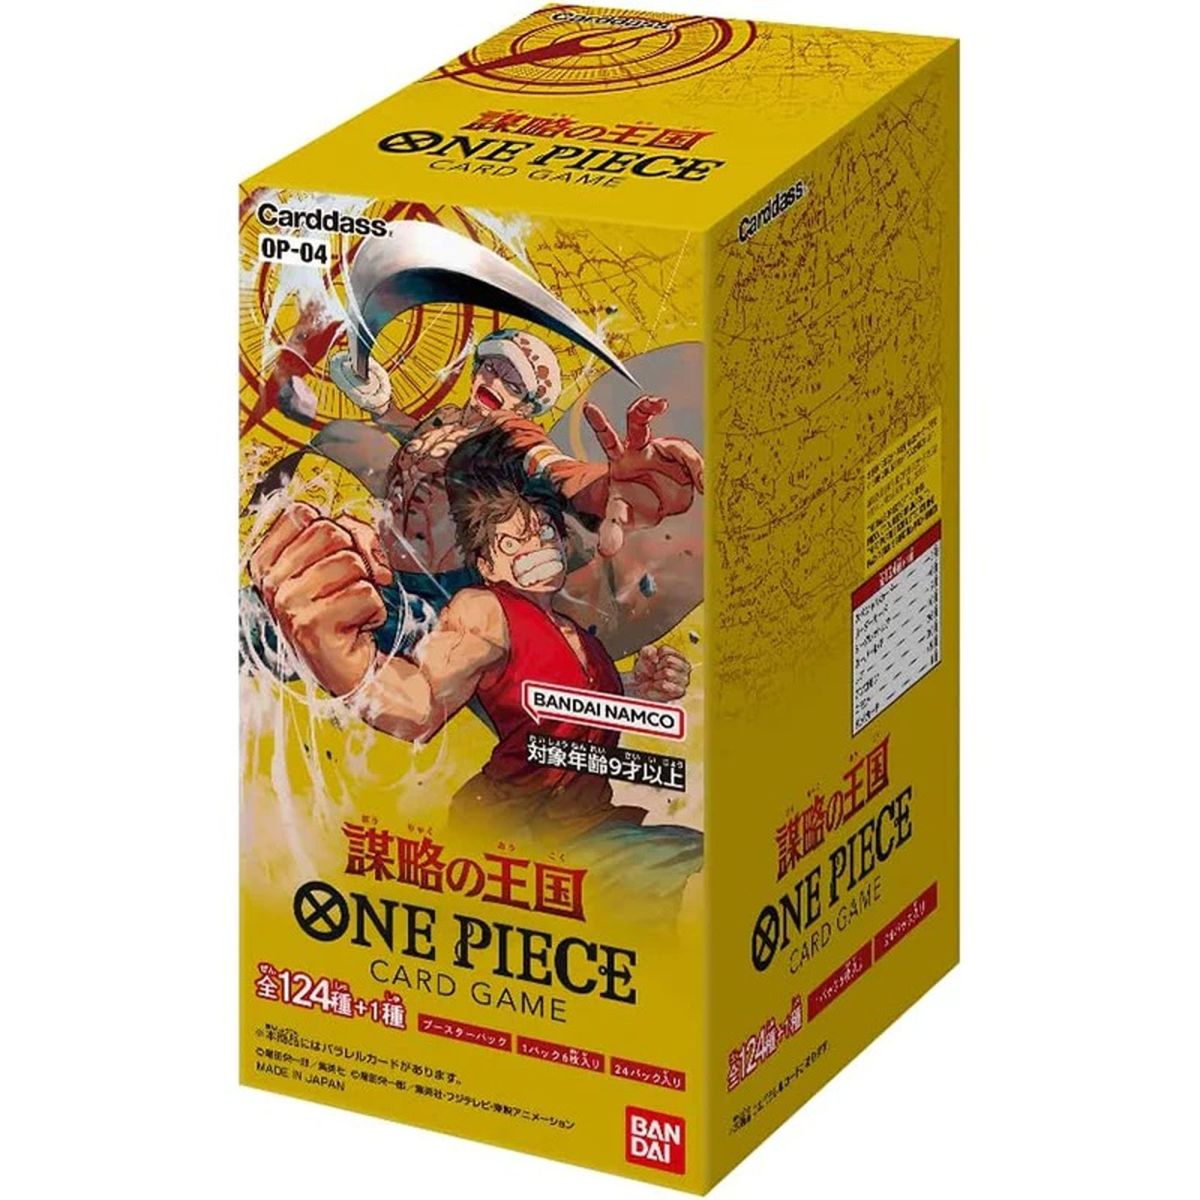 One Piece CG - Display - Boite de 24 Boosters - Kingdoms of Intrigue - OP-04 - JP